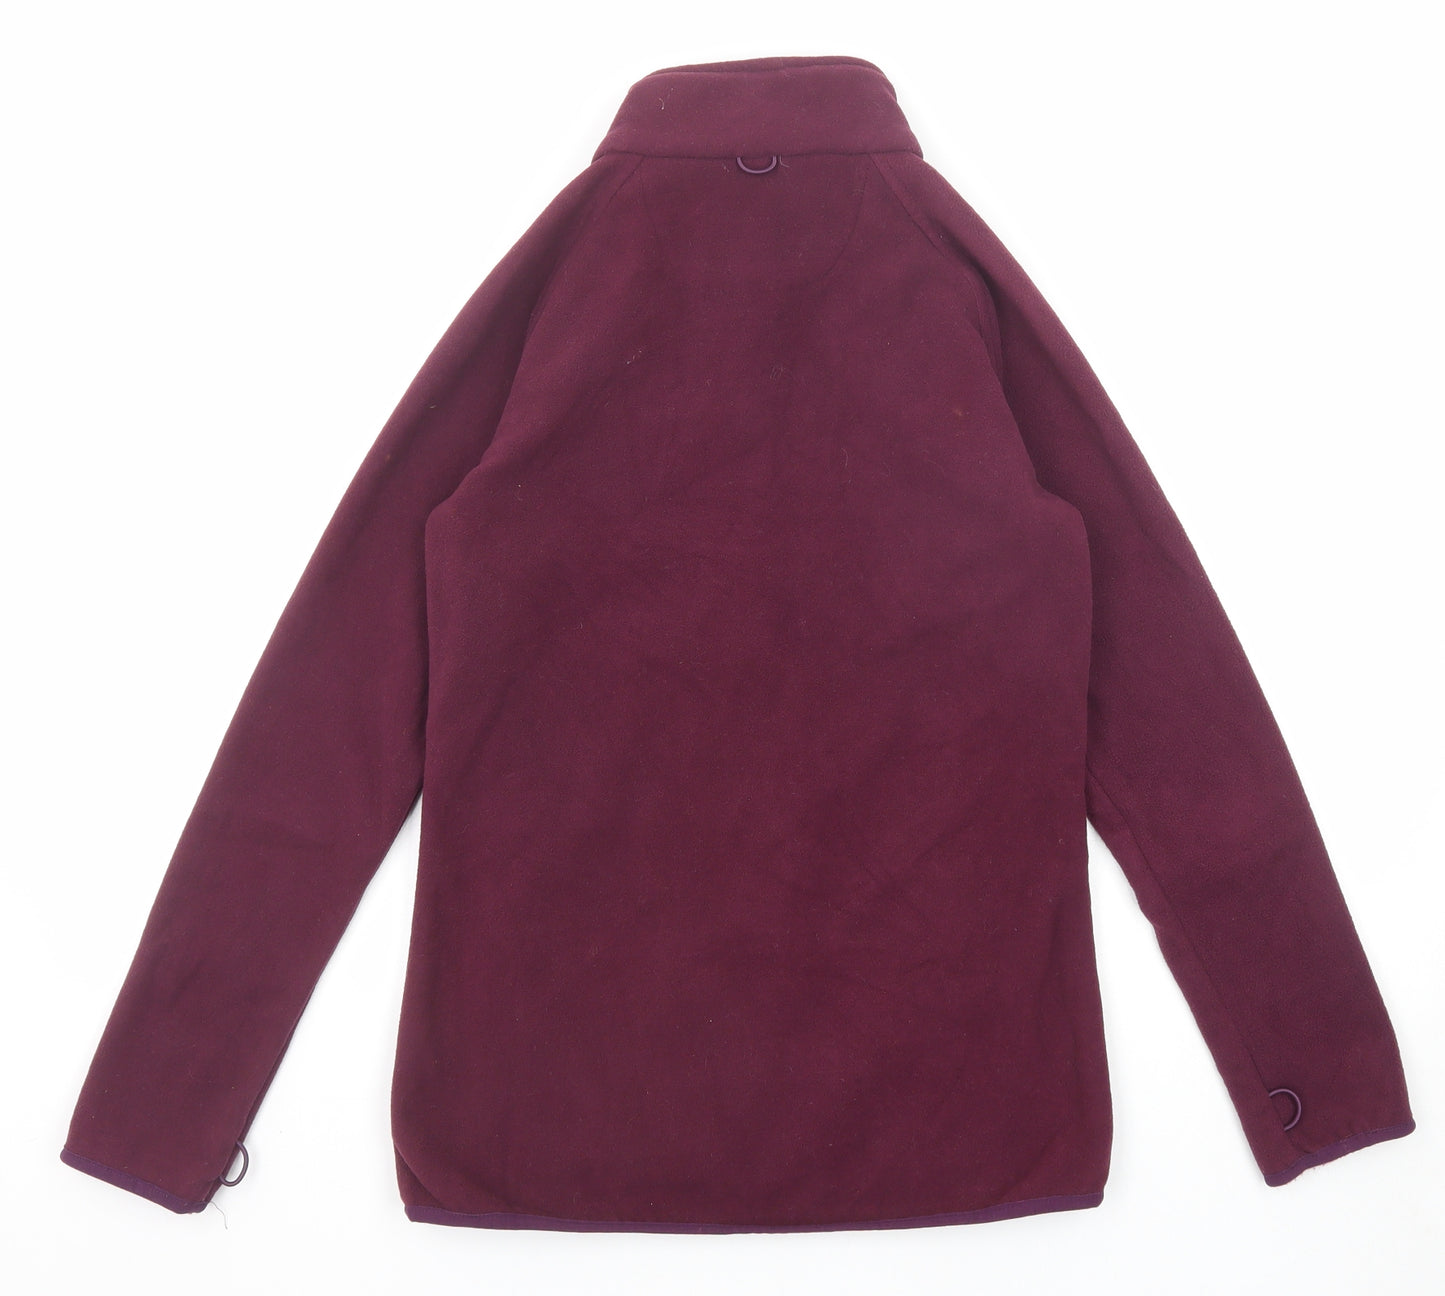 Peter Storm Womens Purple Jacket Size 8 Zip